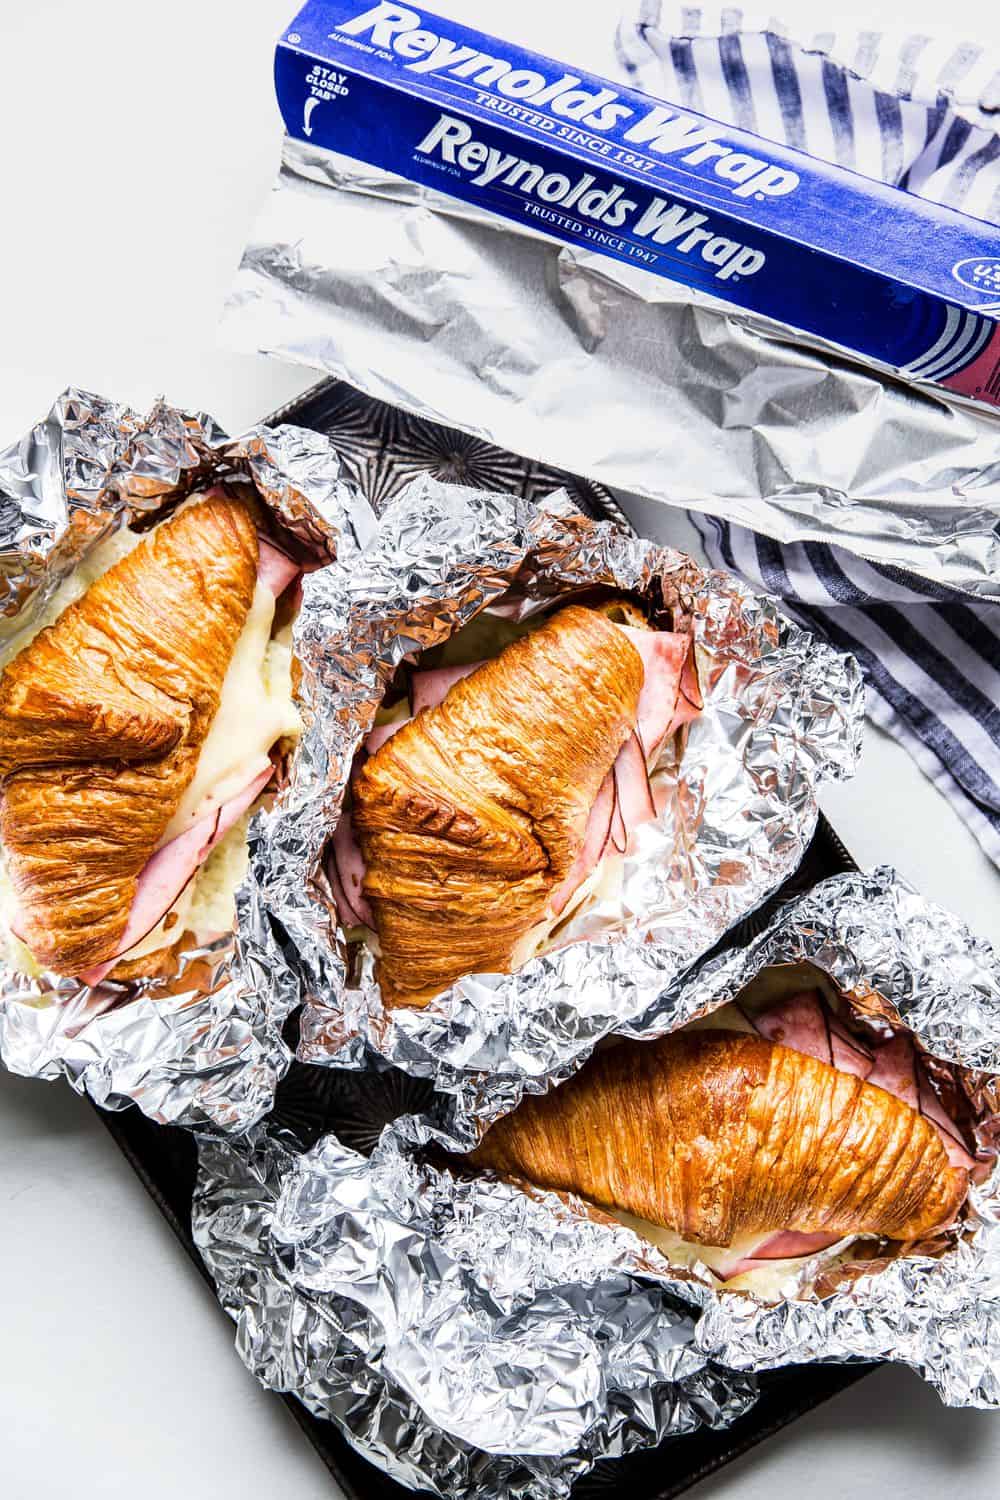 Monte Cristo Croissant Sandwich in tin foil wrappers.